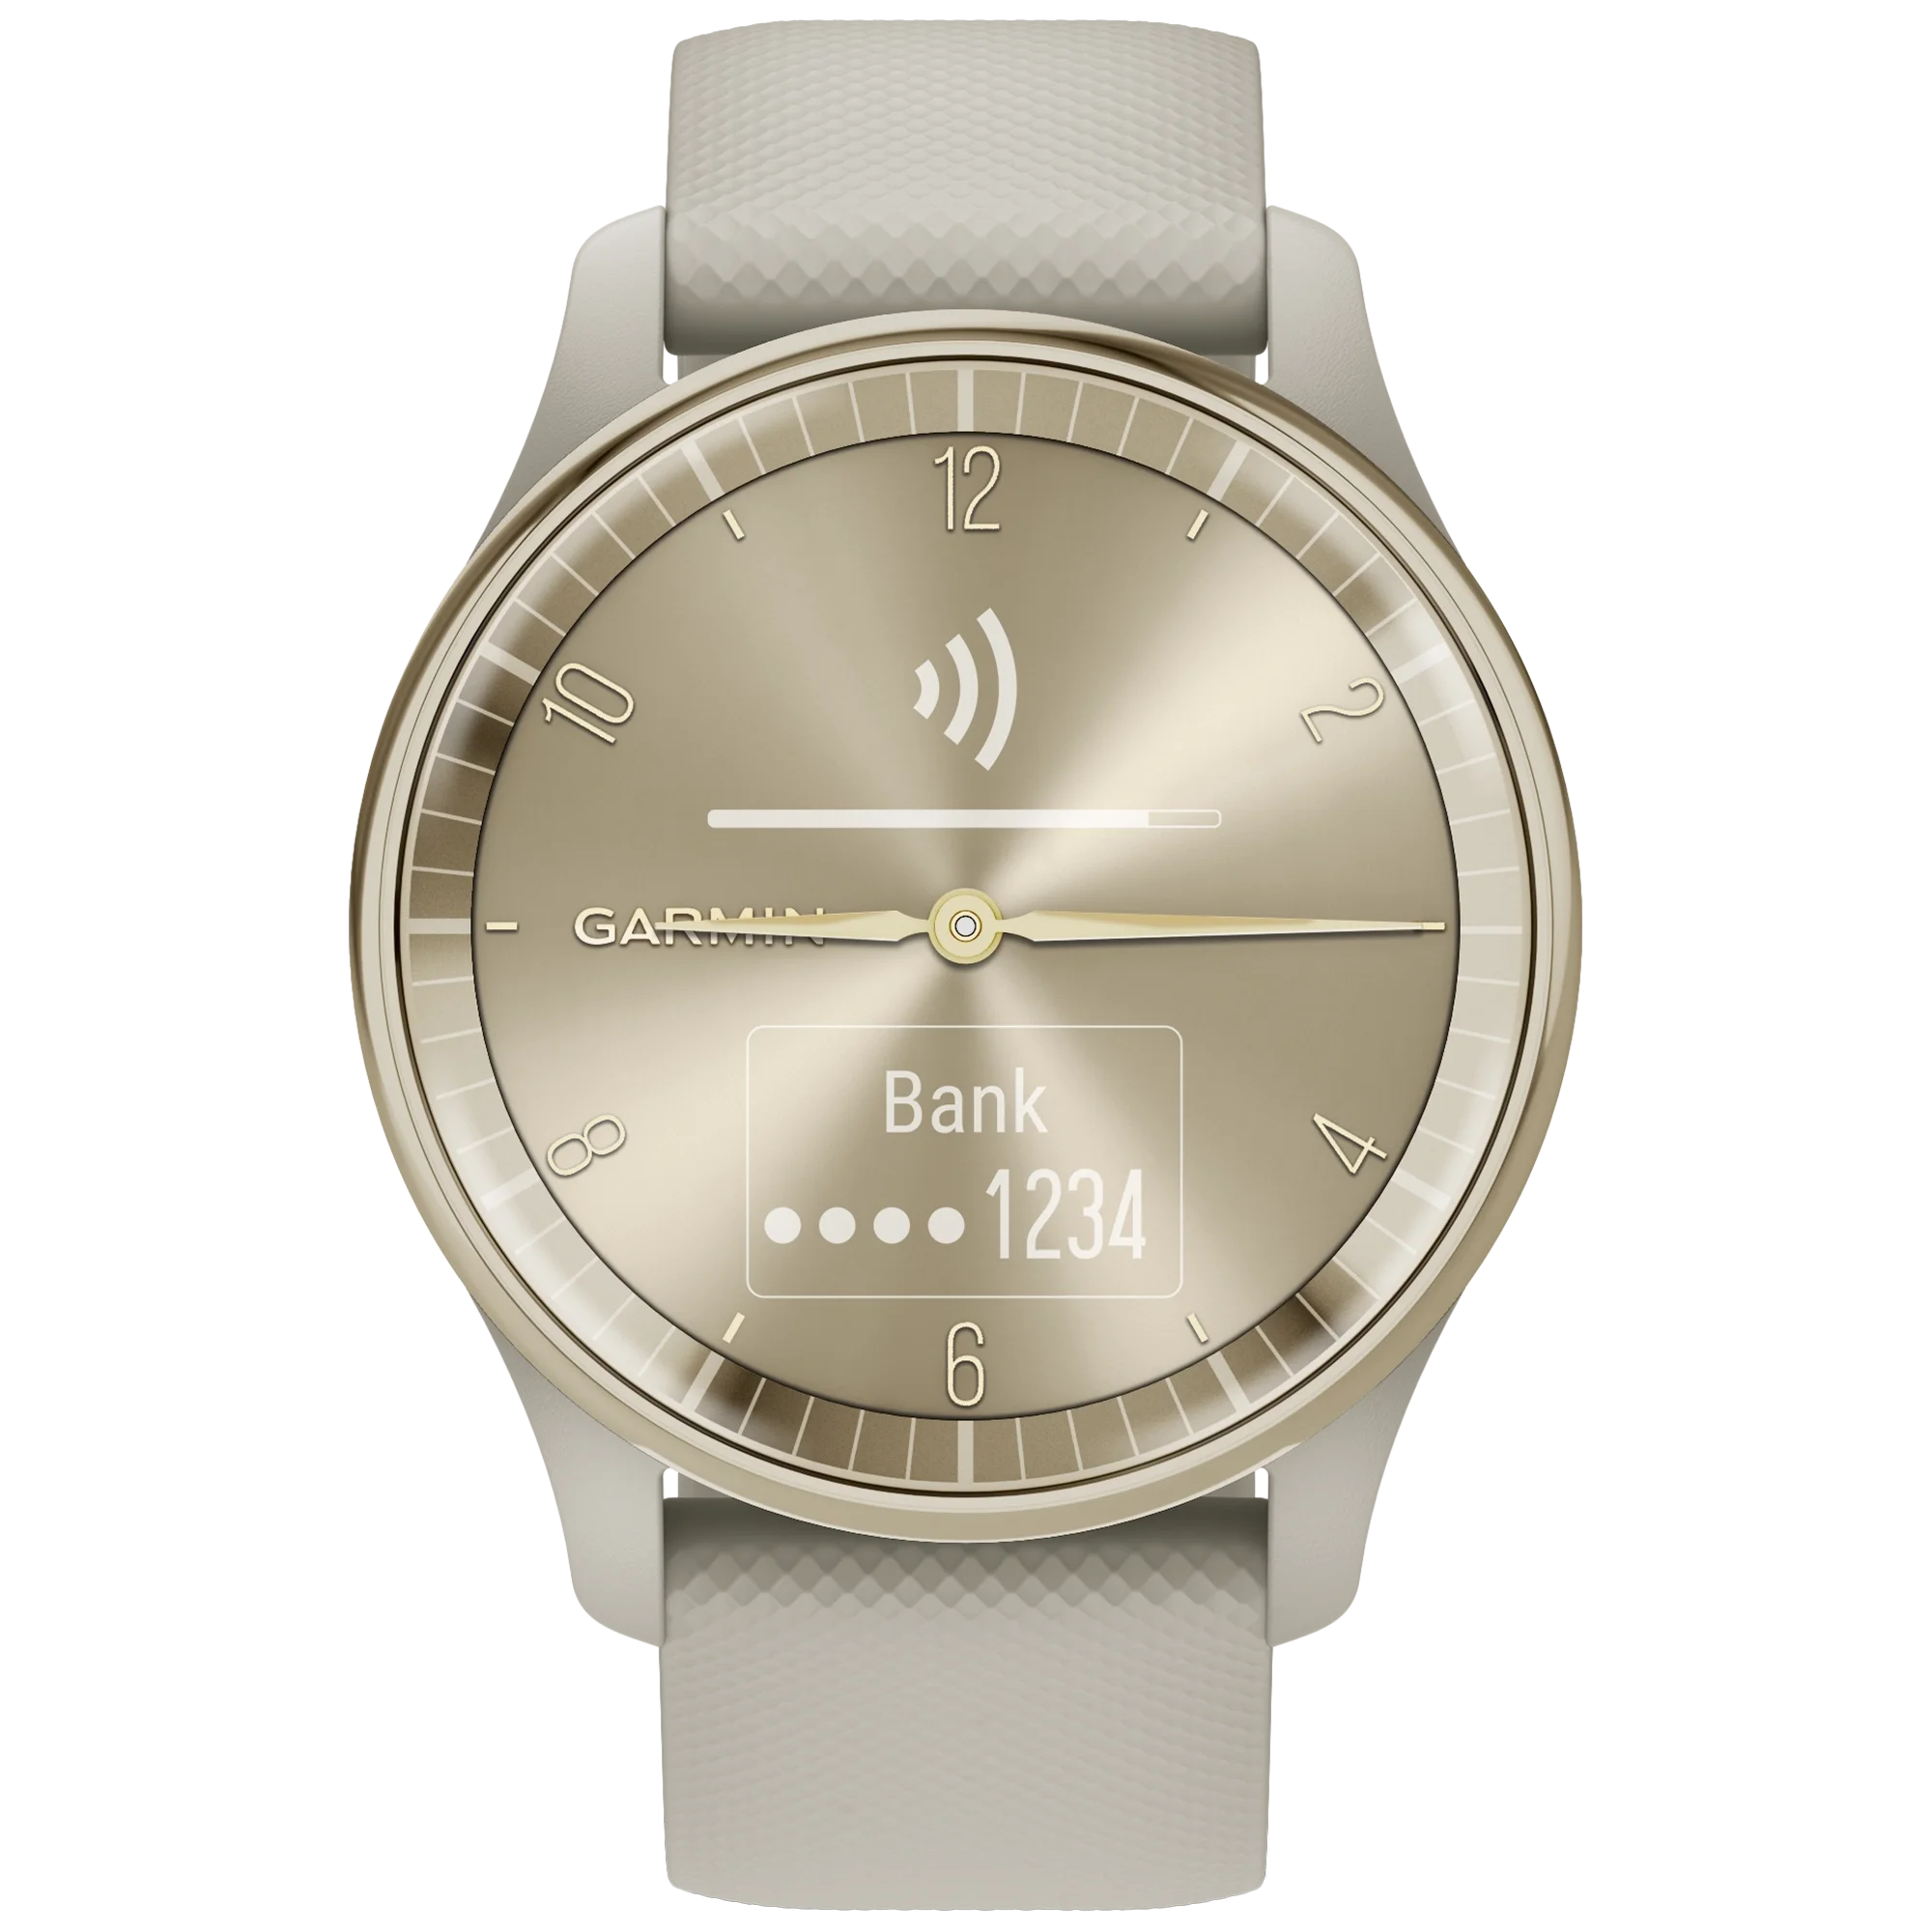 Foto: Smartwatch Garmin vivomove Trend